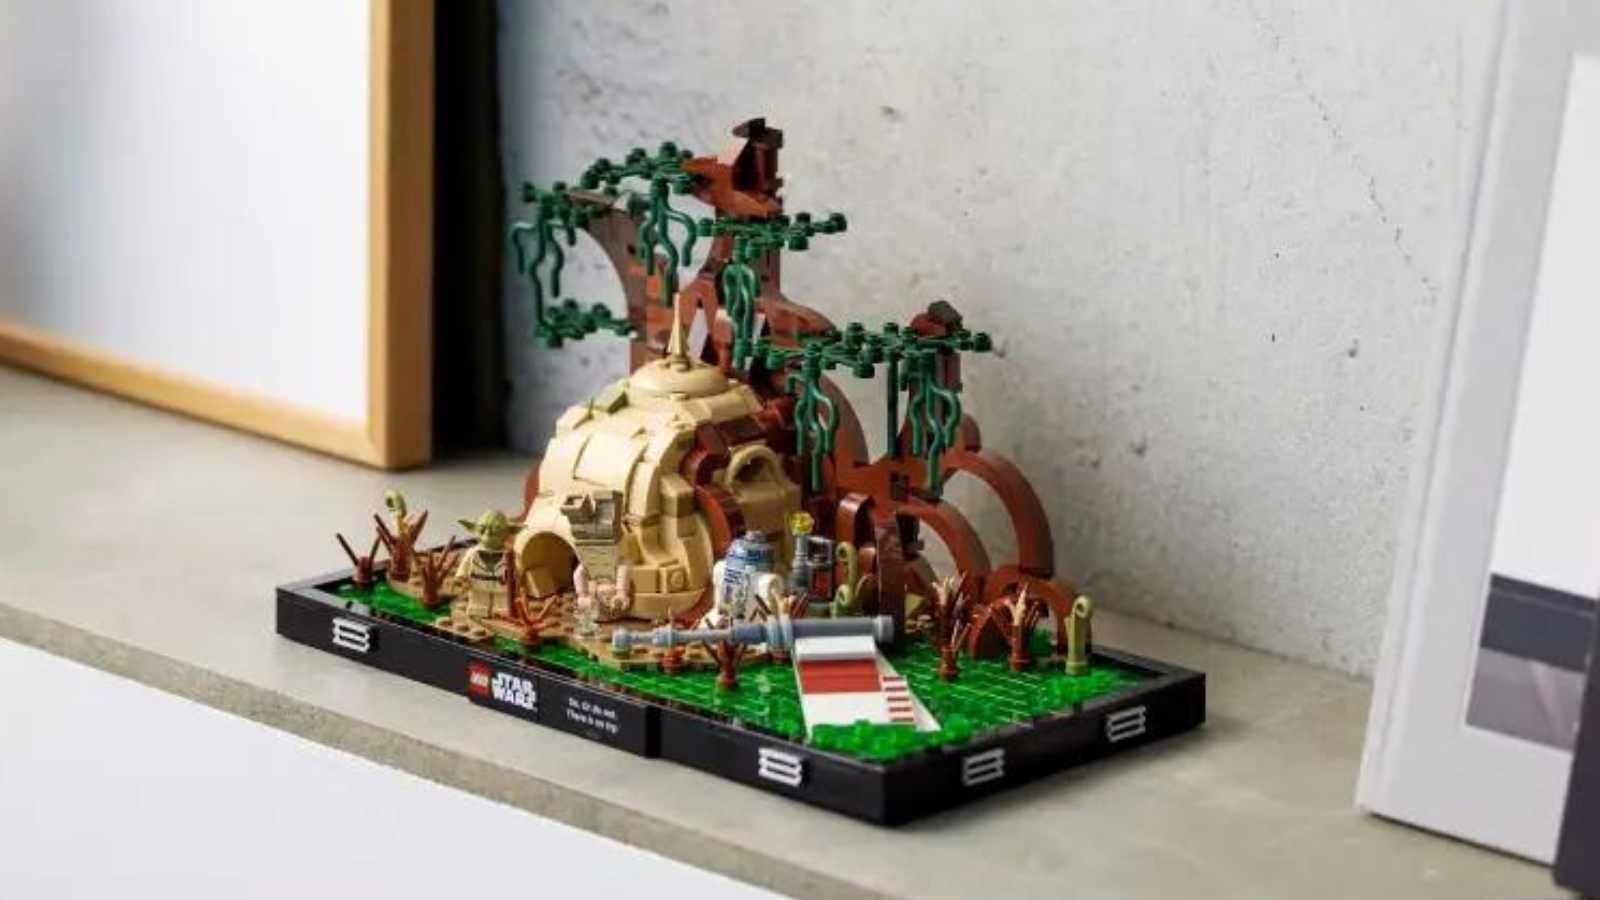 The LEGO Star Wars Dagobah Jedi Training Diorama on display